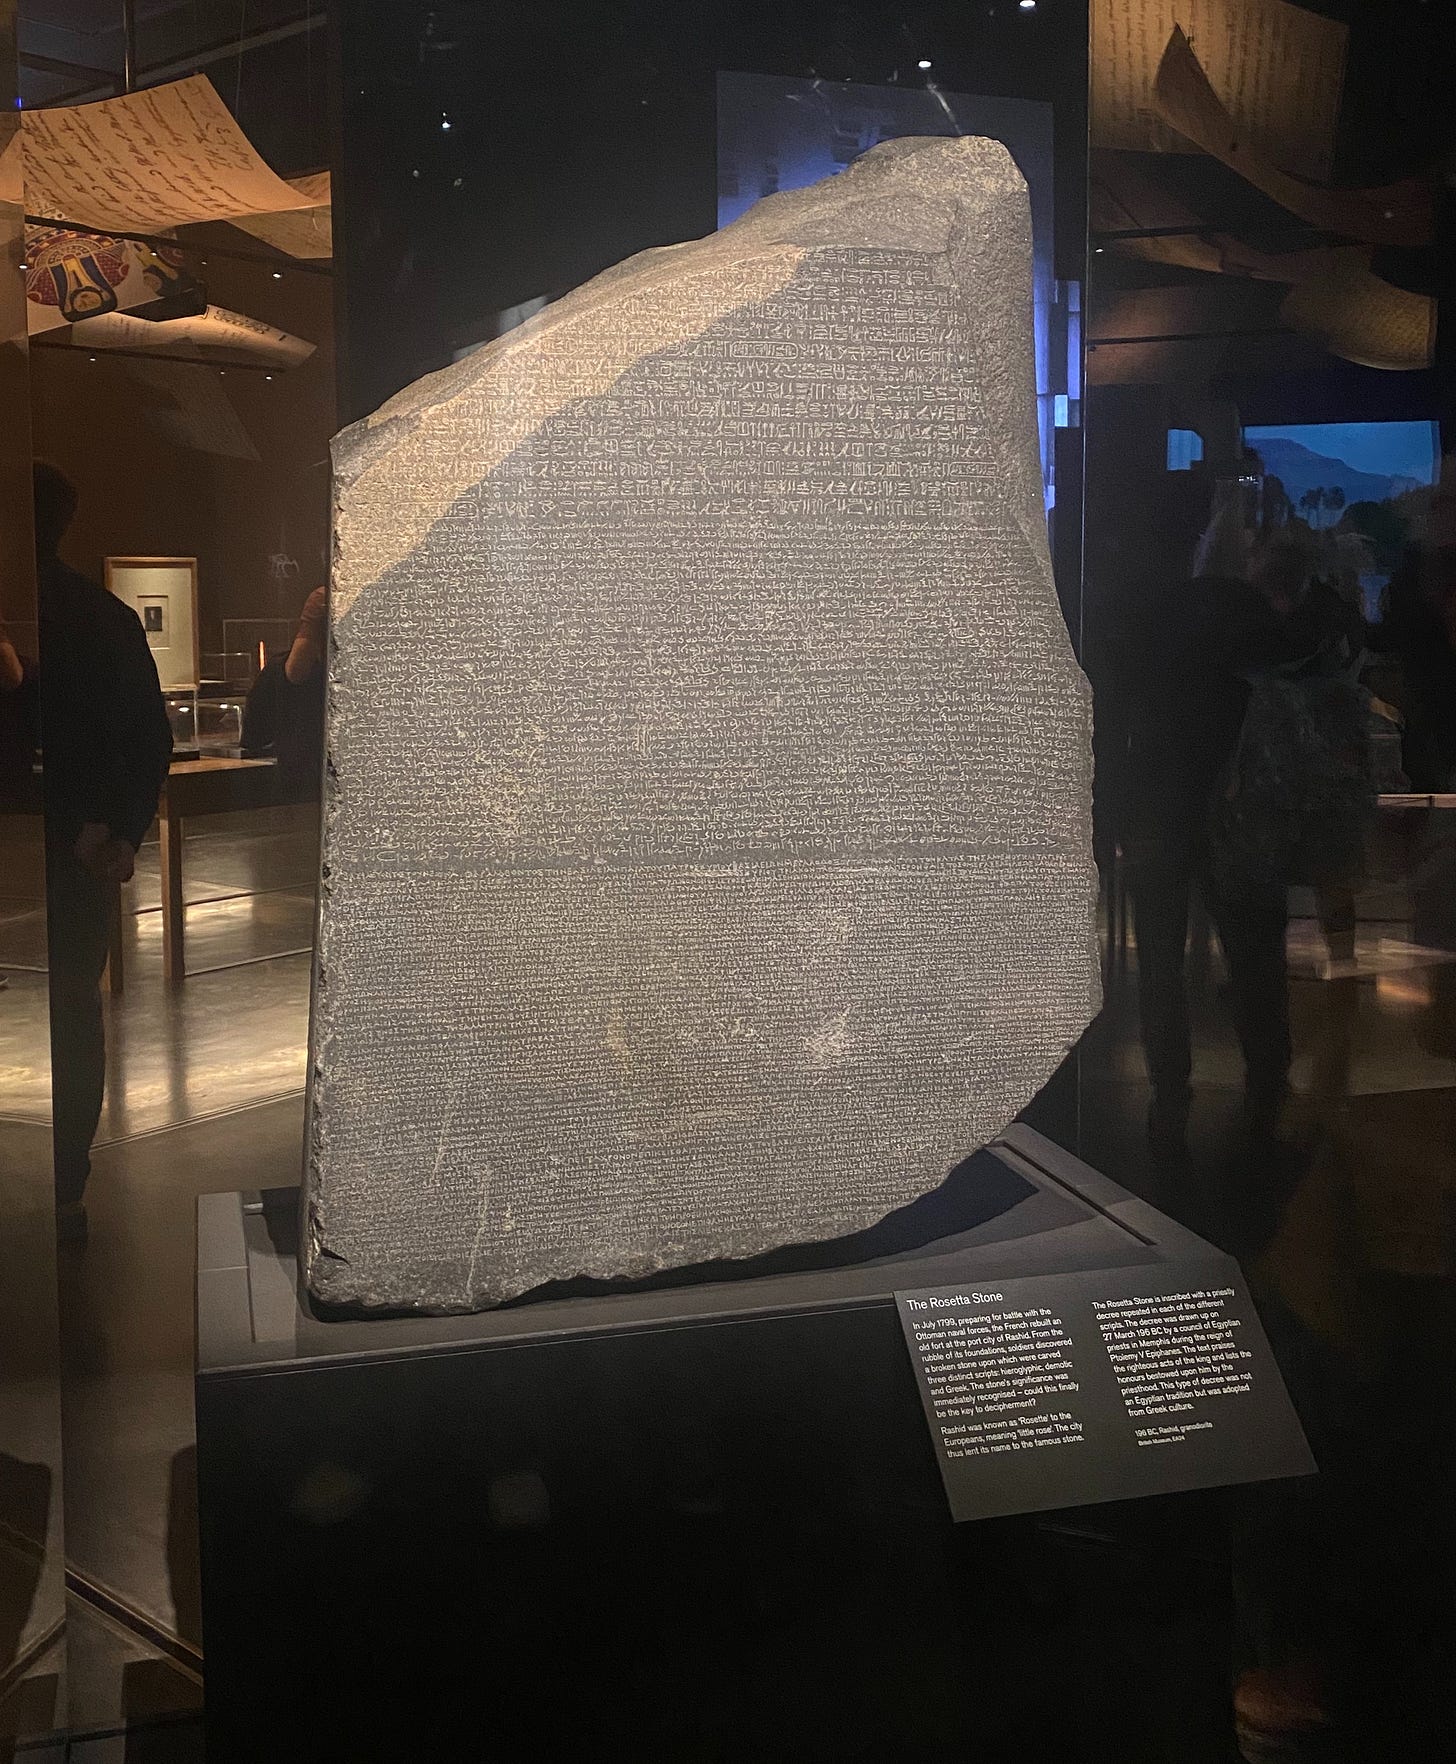 The Rosetta Stone in the British Museum's Hieroglyph exhibition